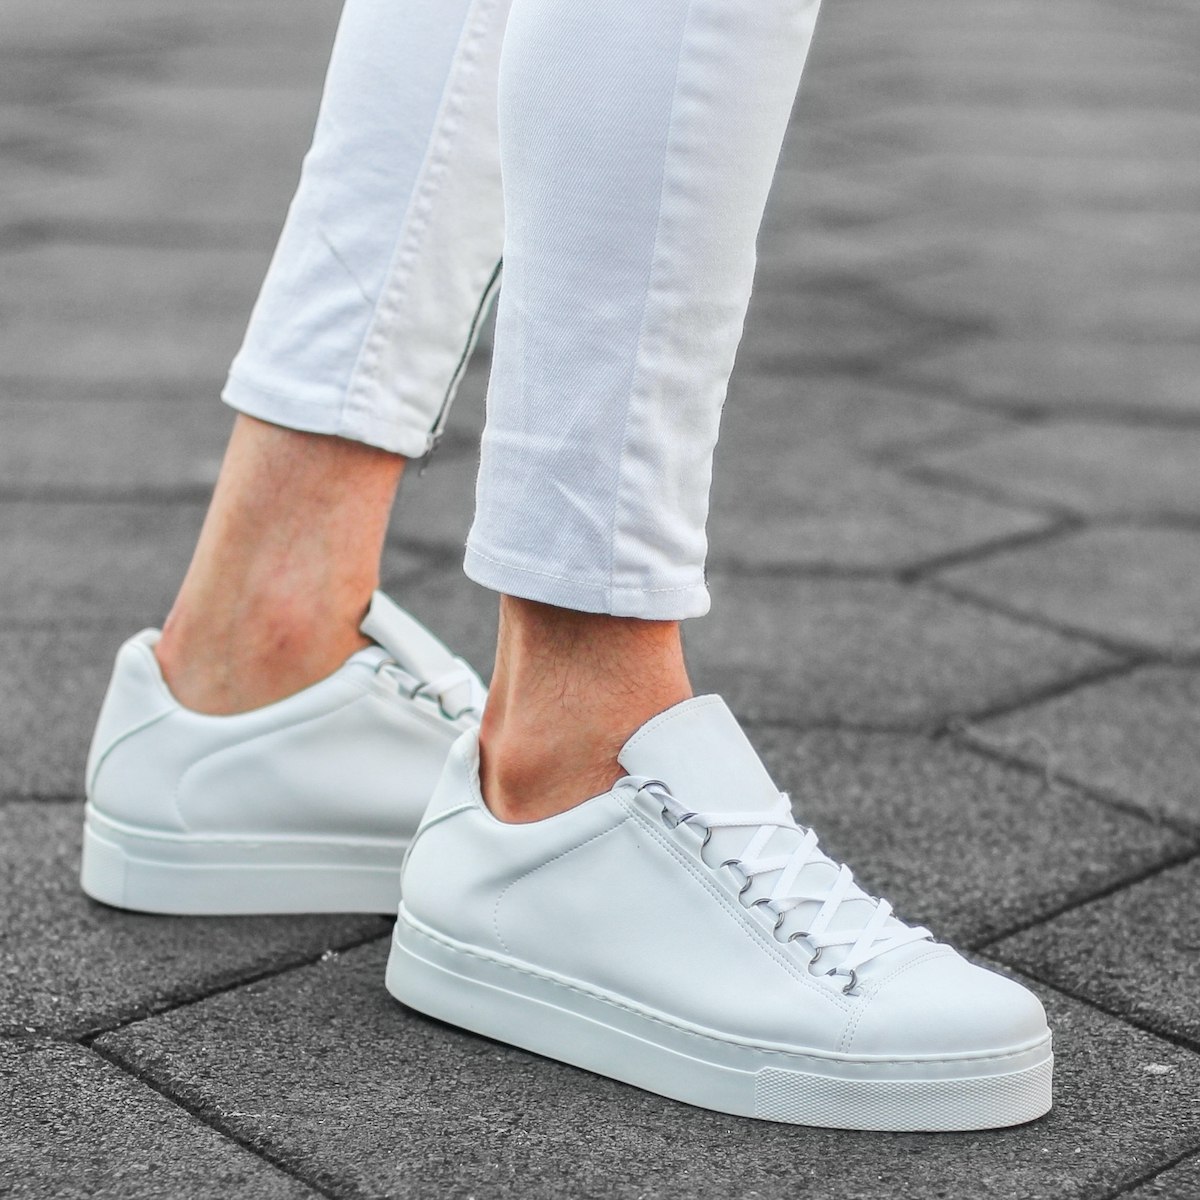 Orthodox Cyberruimte Belastingbetaler Mox High Sole Sneakers in Pure White | Designer Shoes